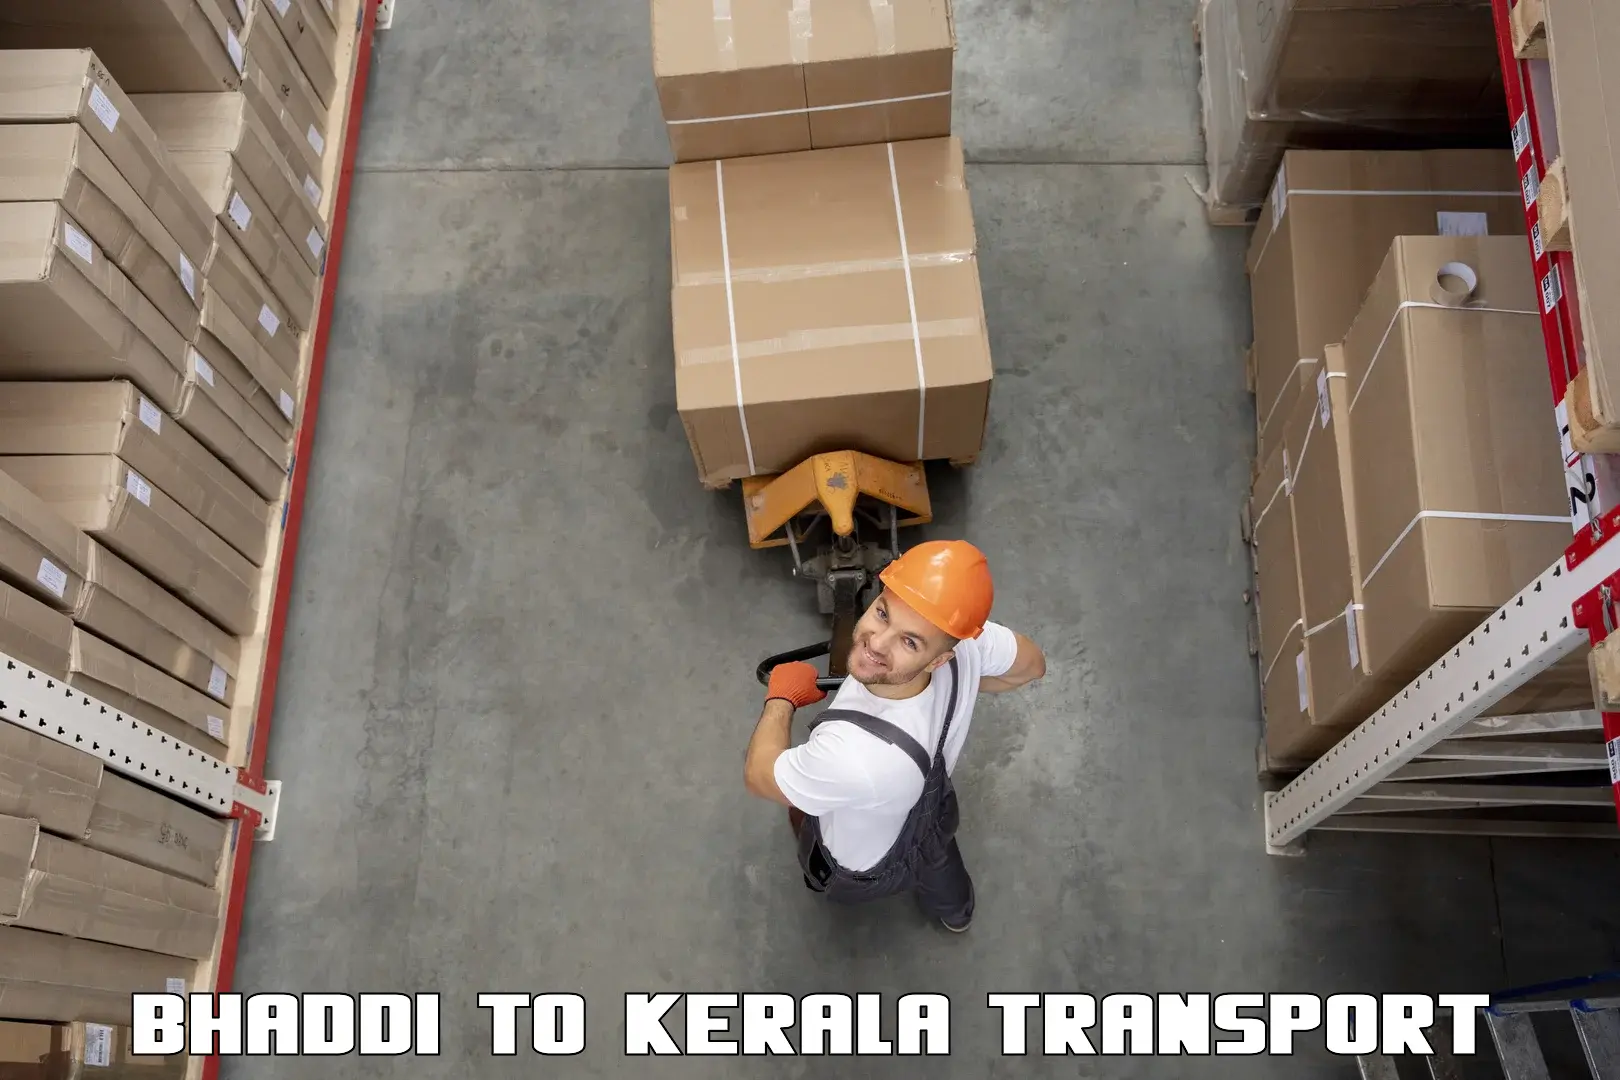 Commercial transport service Bhaddi to Karunagappally